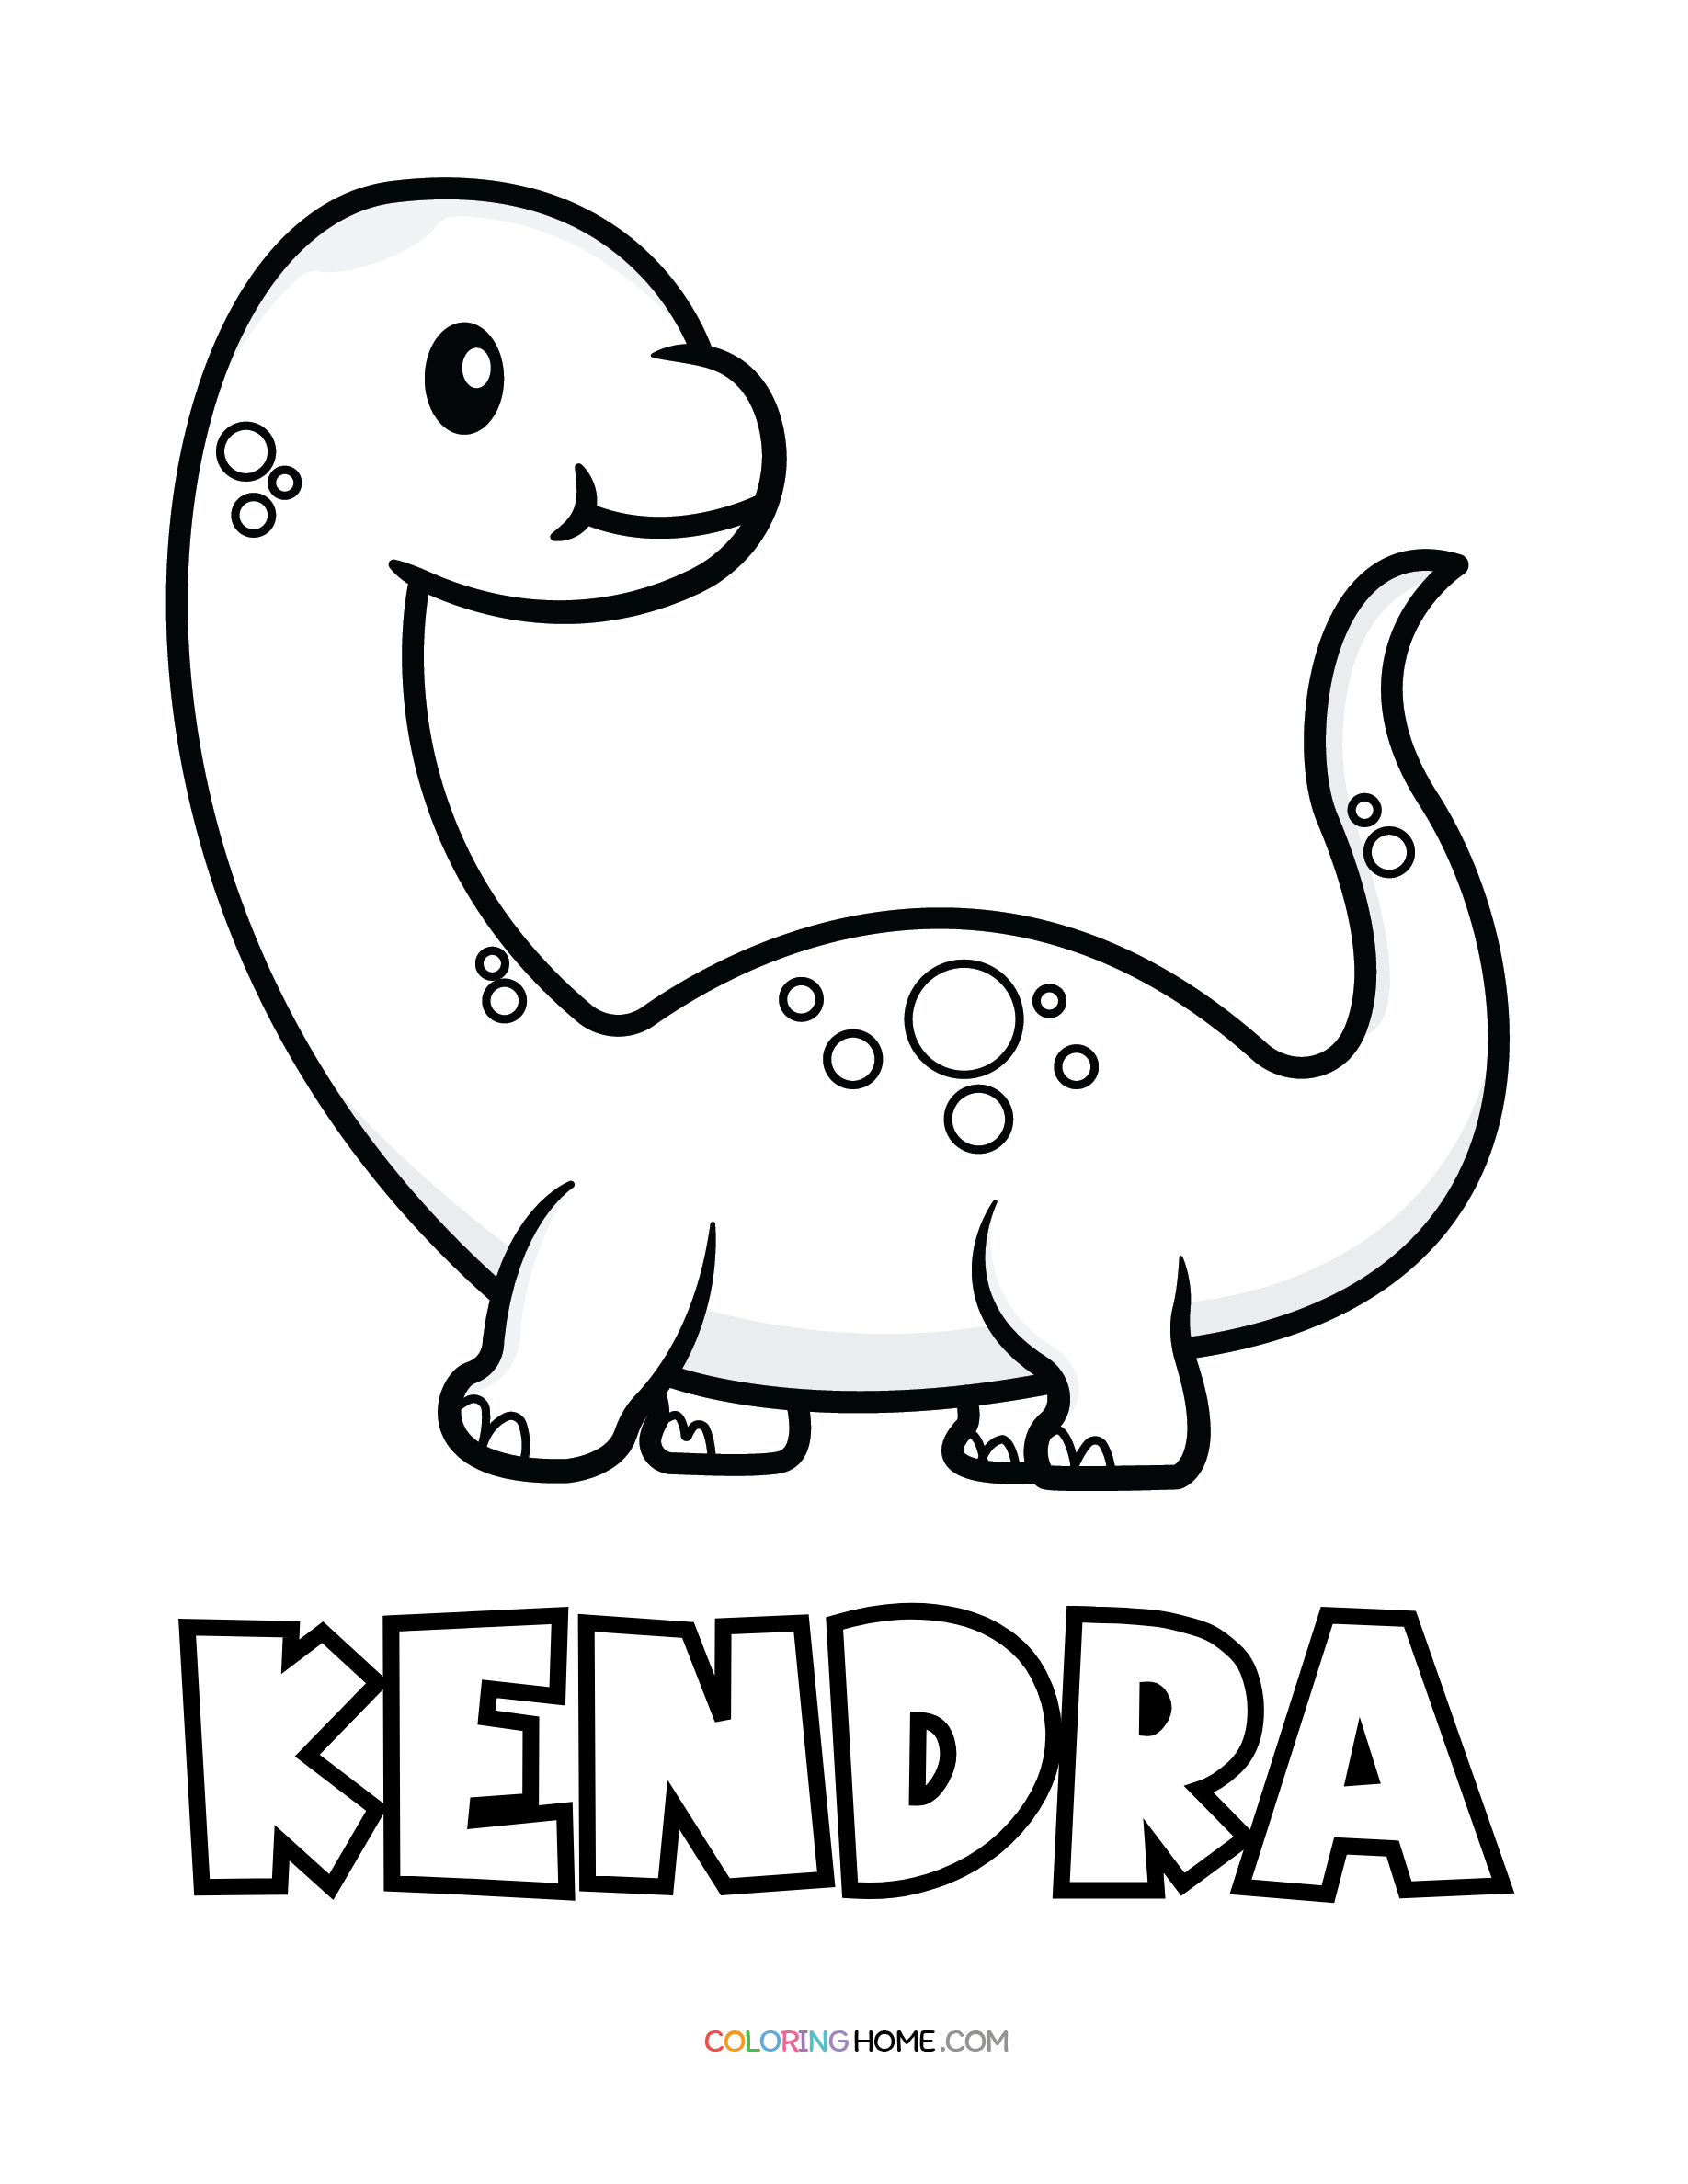 Kendra dinosaur coloring page